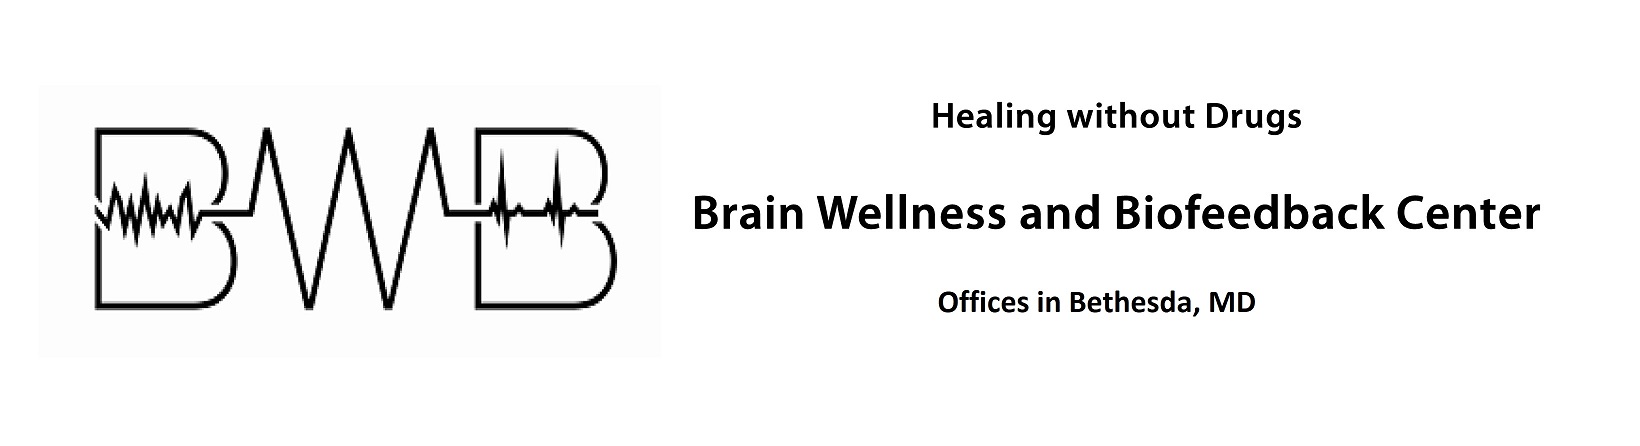 Brain Wellness and Biofeedback Center